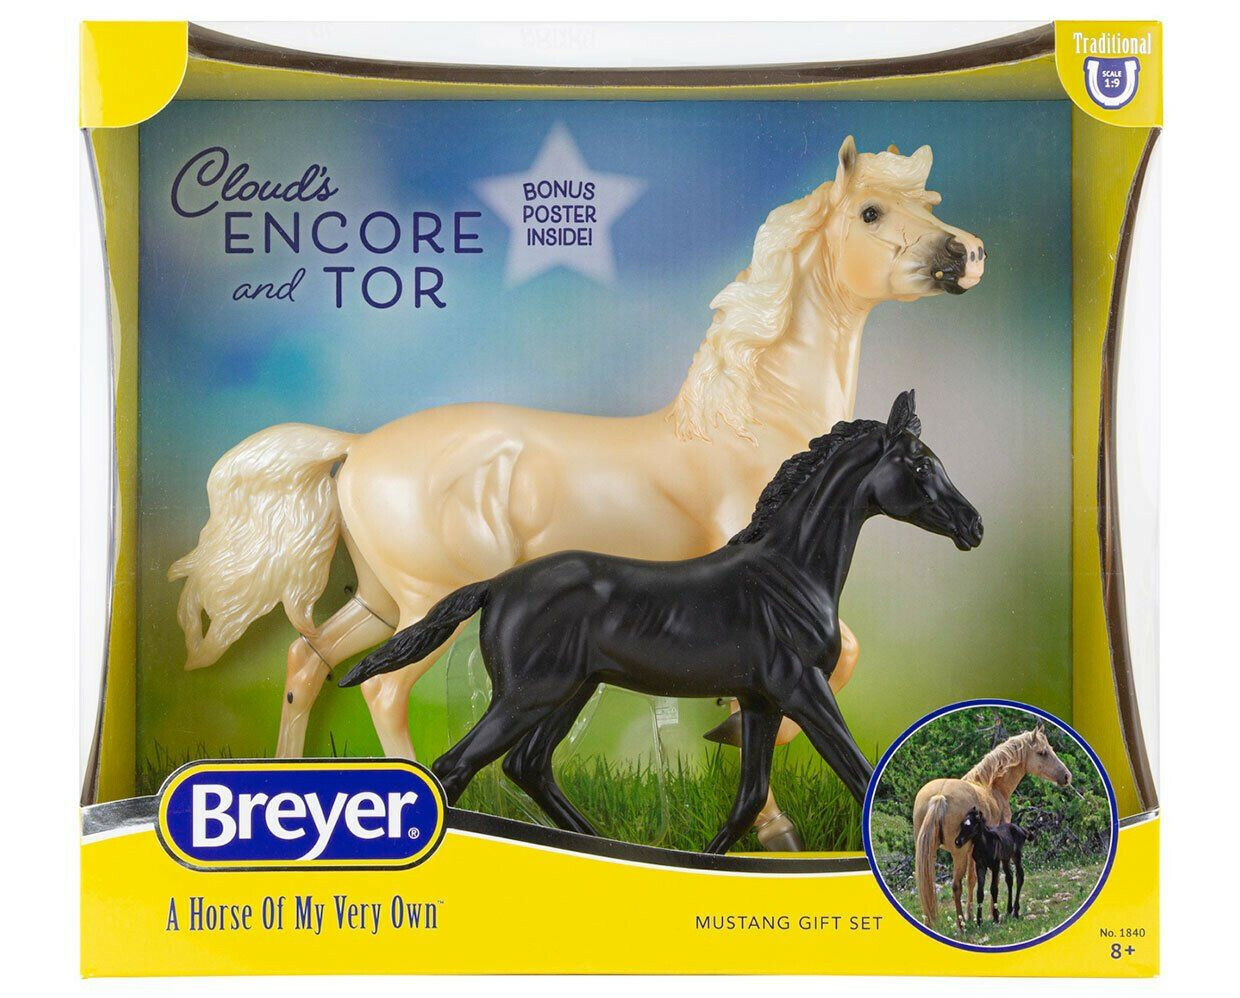 BREYER CLOUD'S ENCORE & TOR MUSTANG GIFT SET + BONUS POSTER #1840 MODEL HORSE